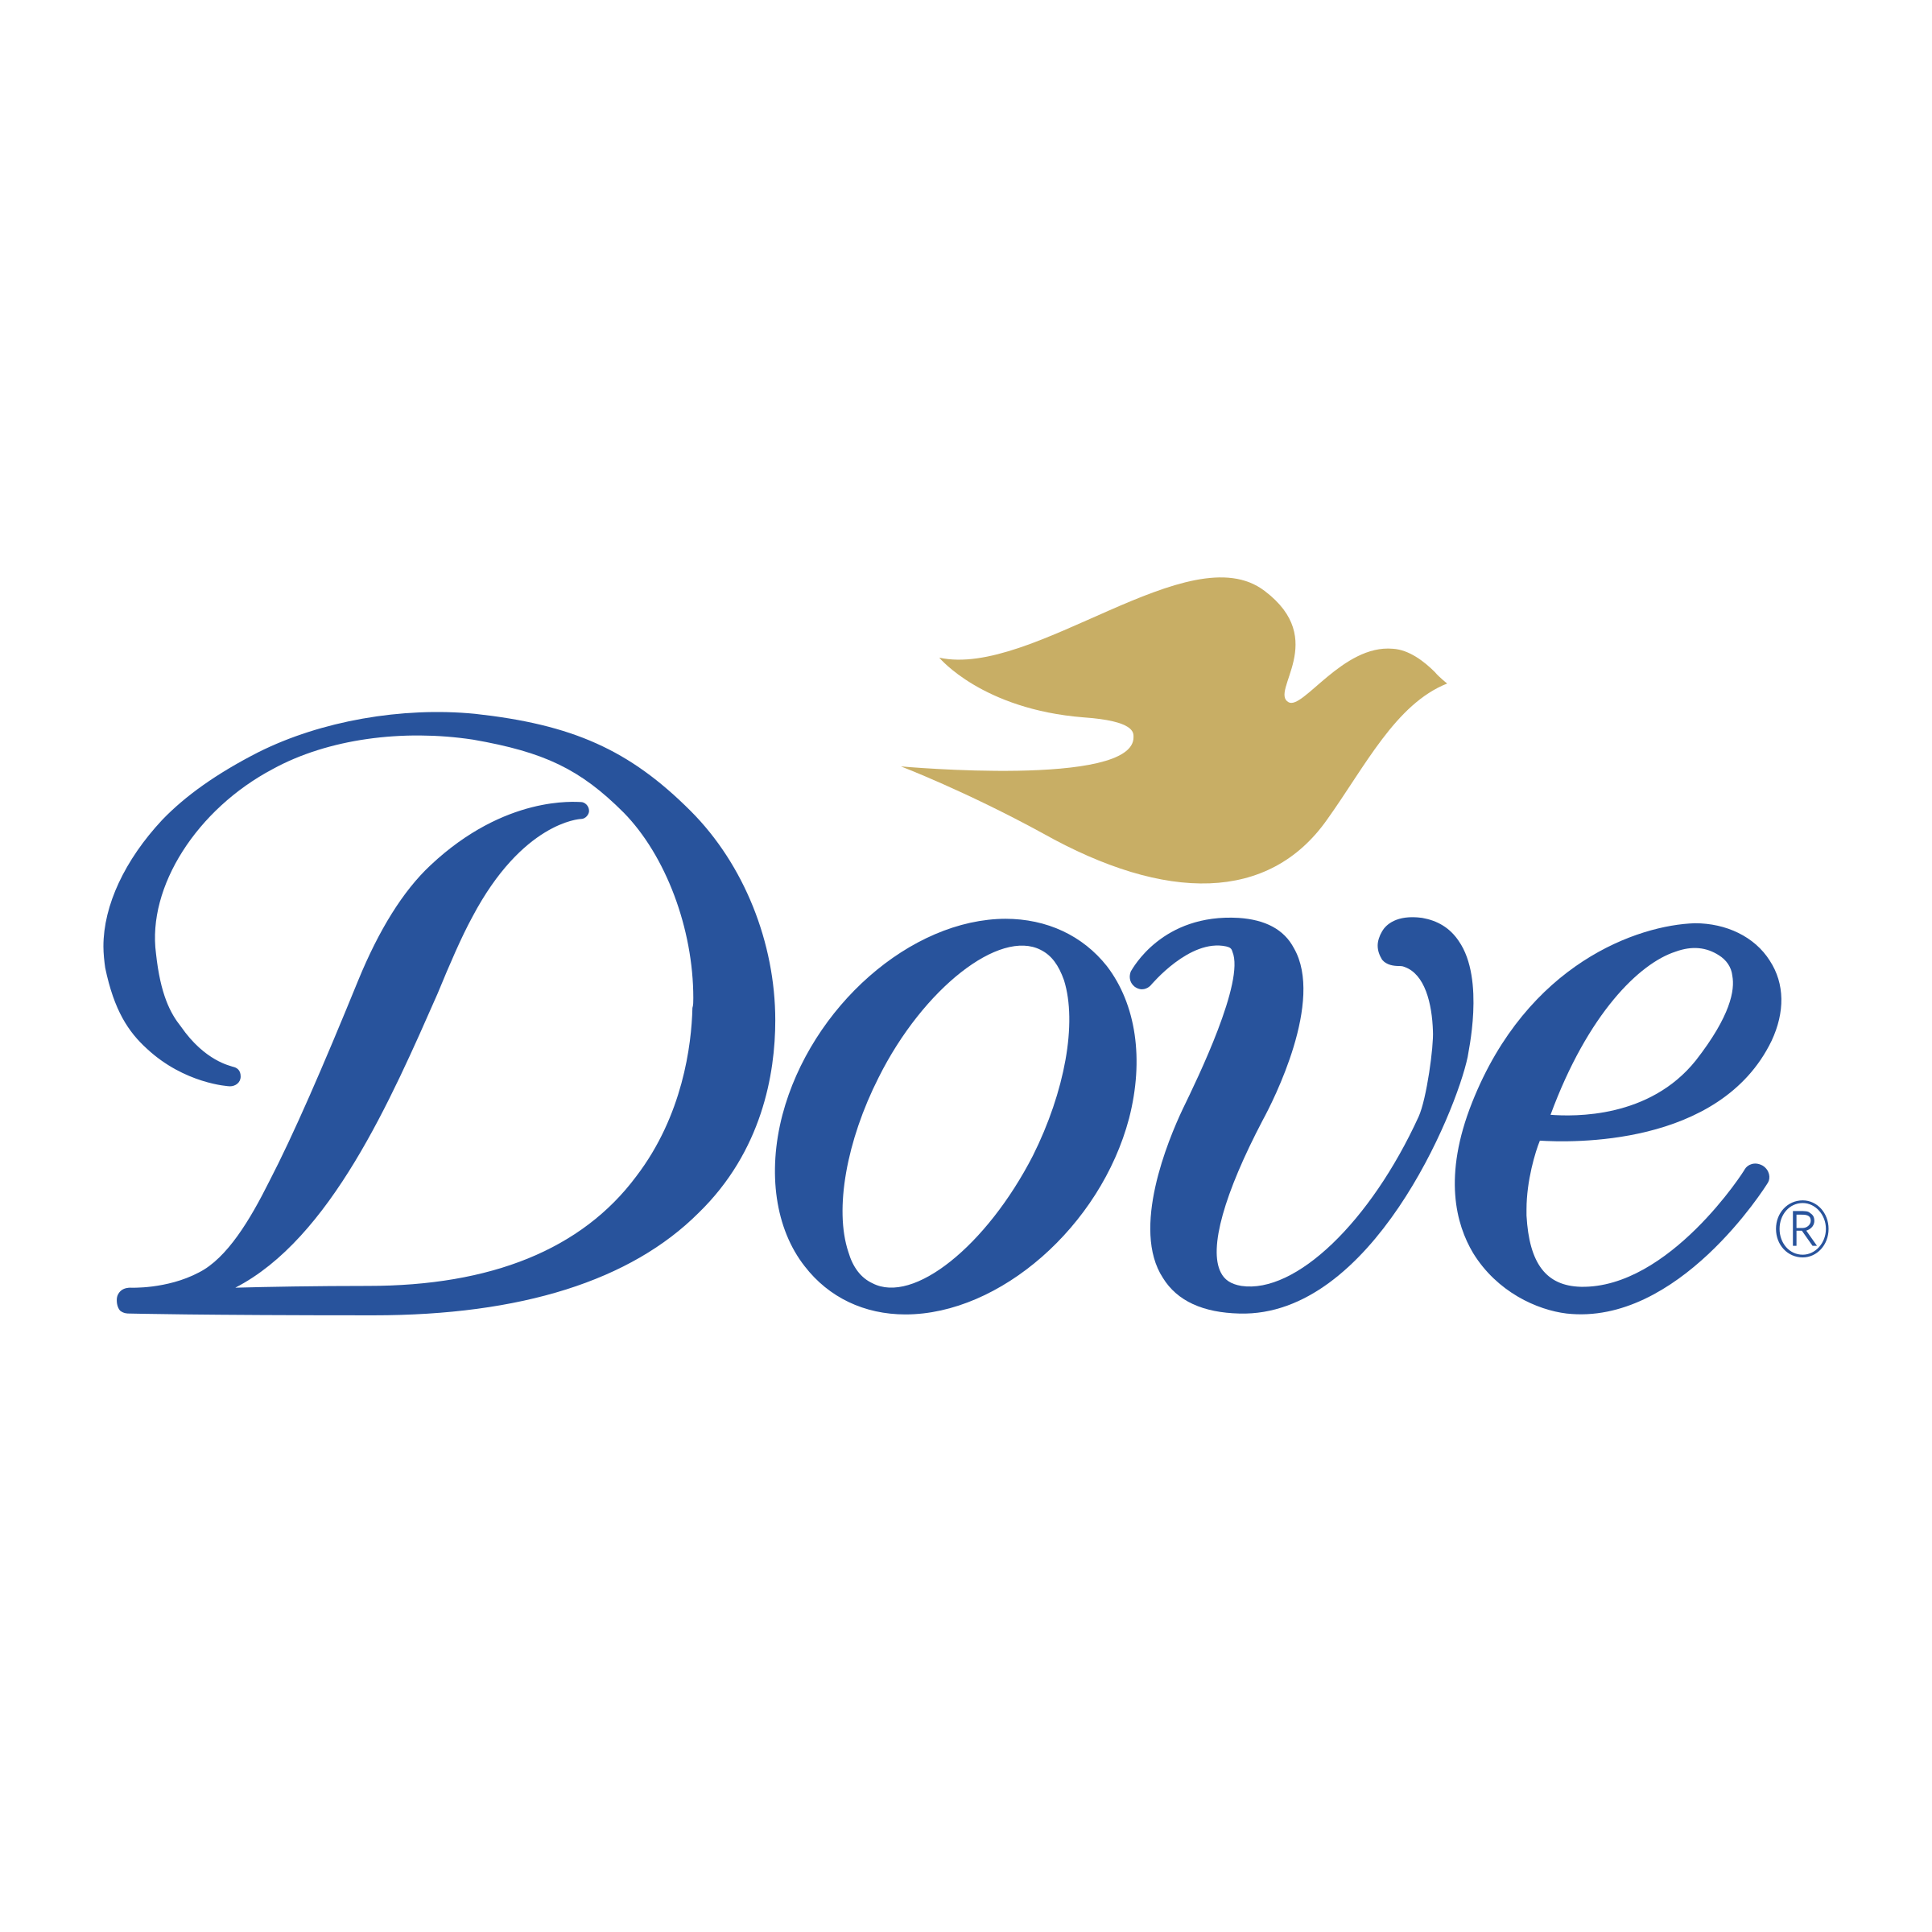 dove-1-logo-png-transparent